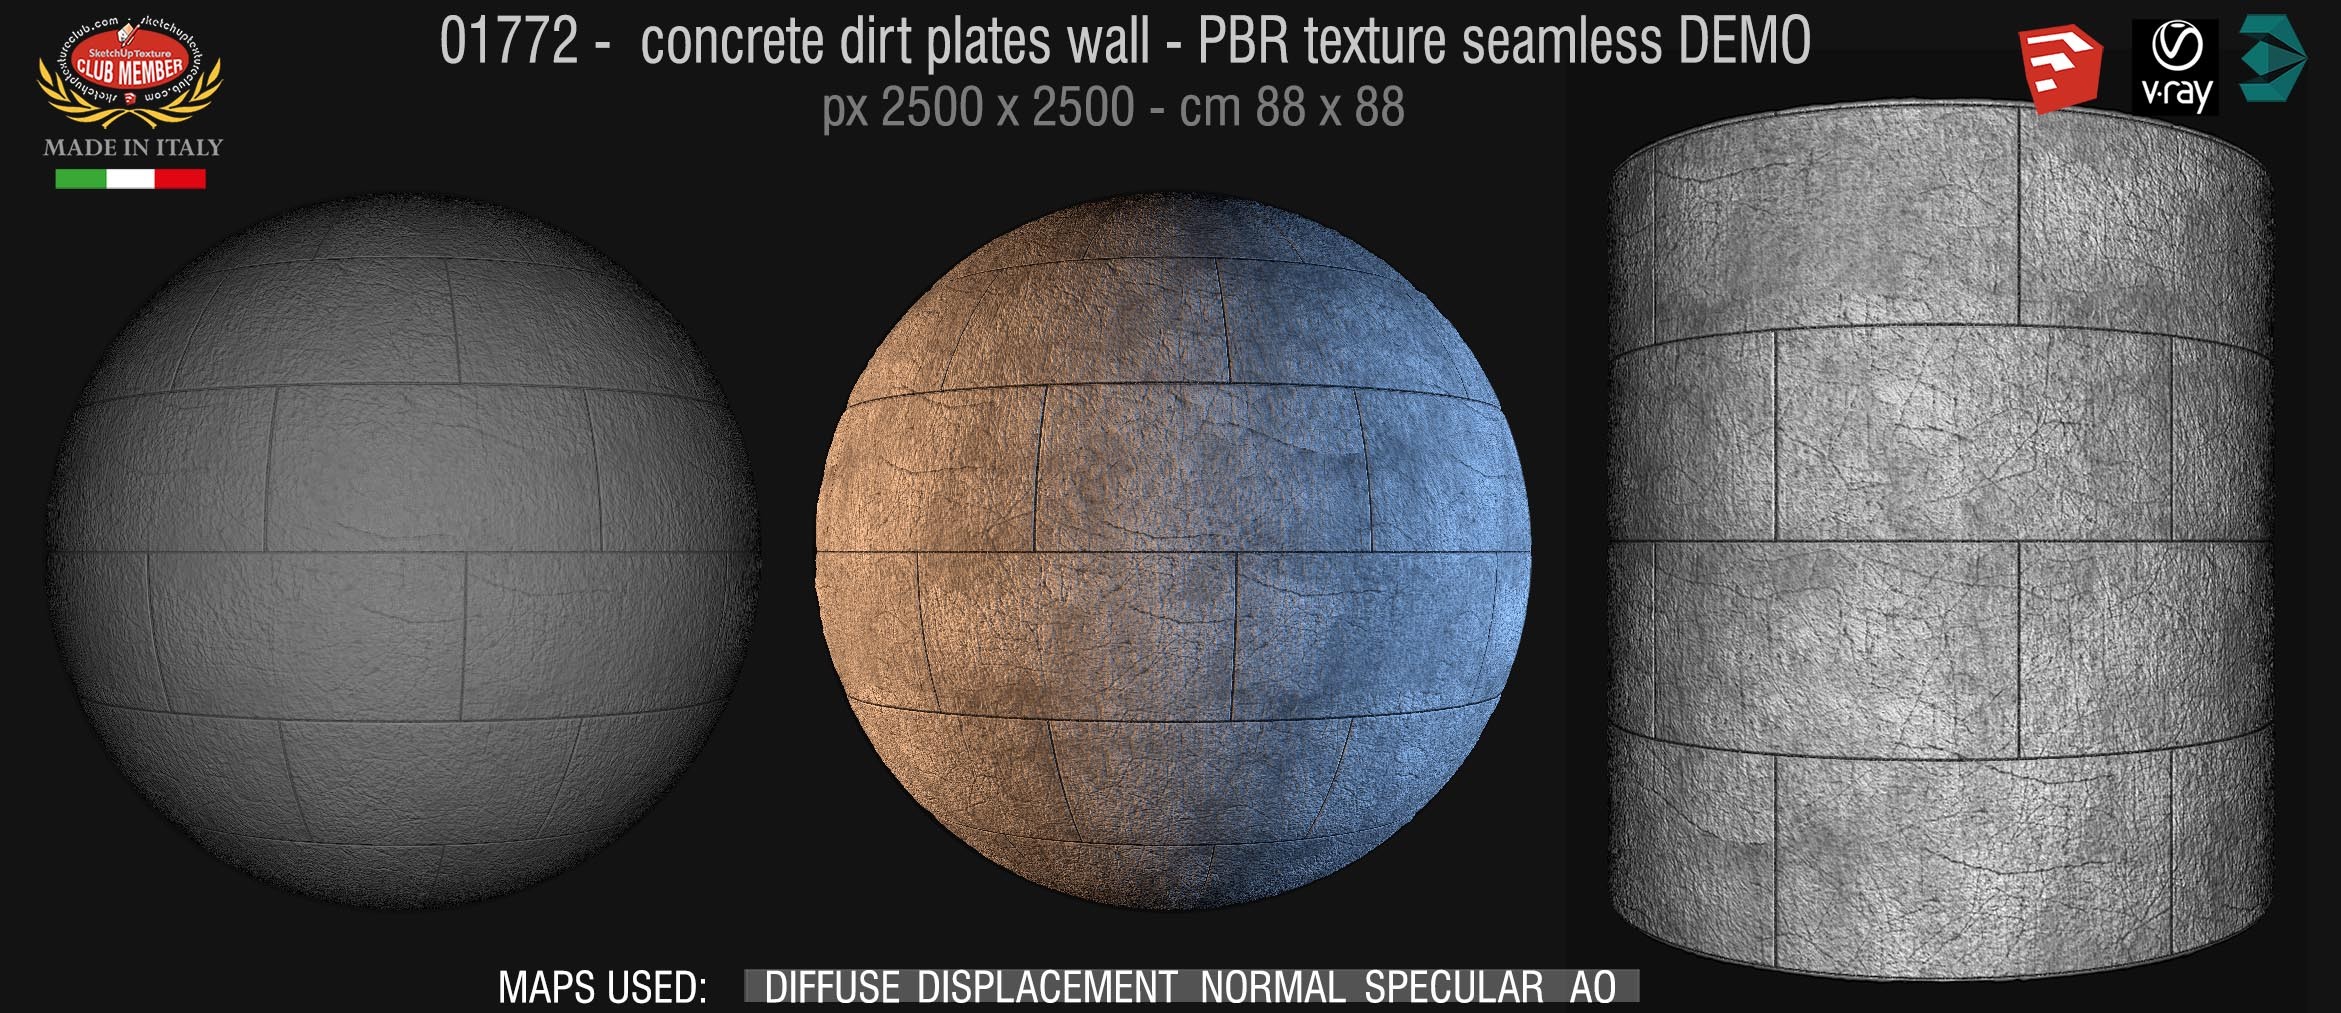 01772 concrete dirt plates wall PBR texture seamless DEMO